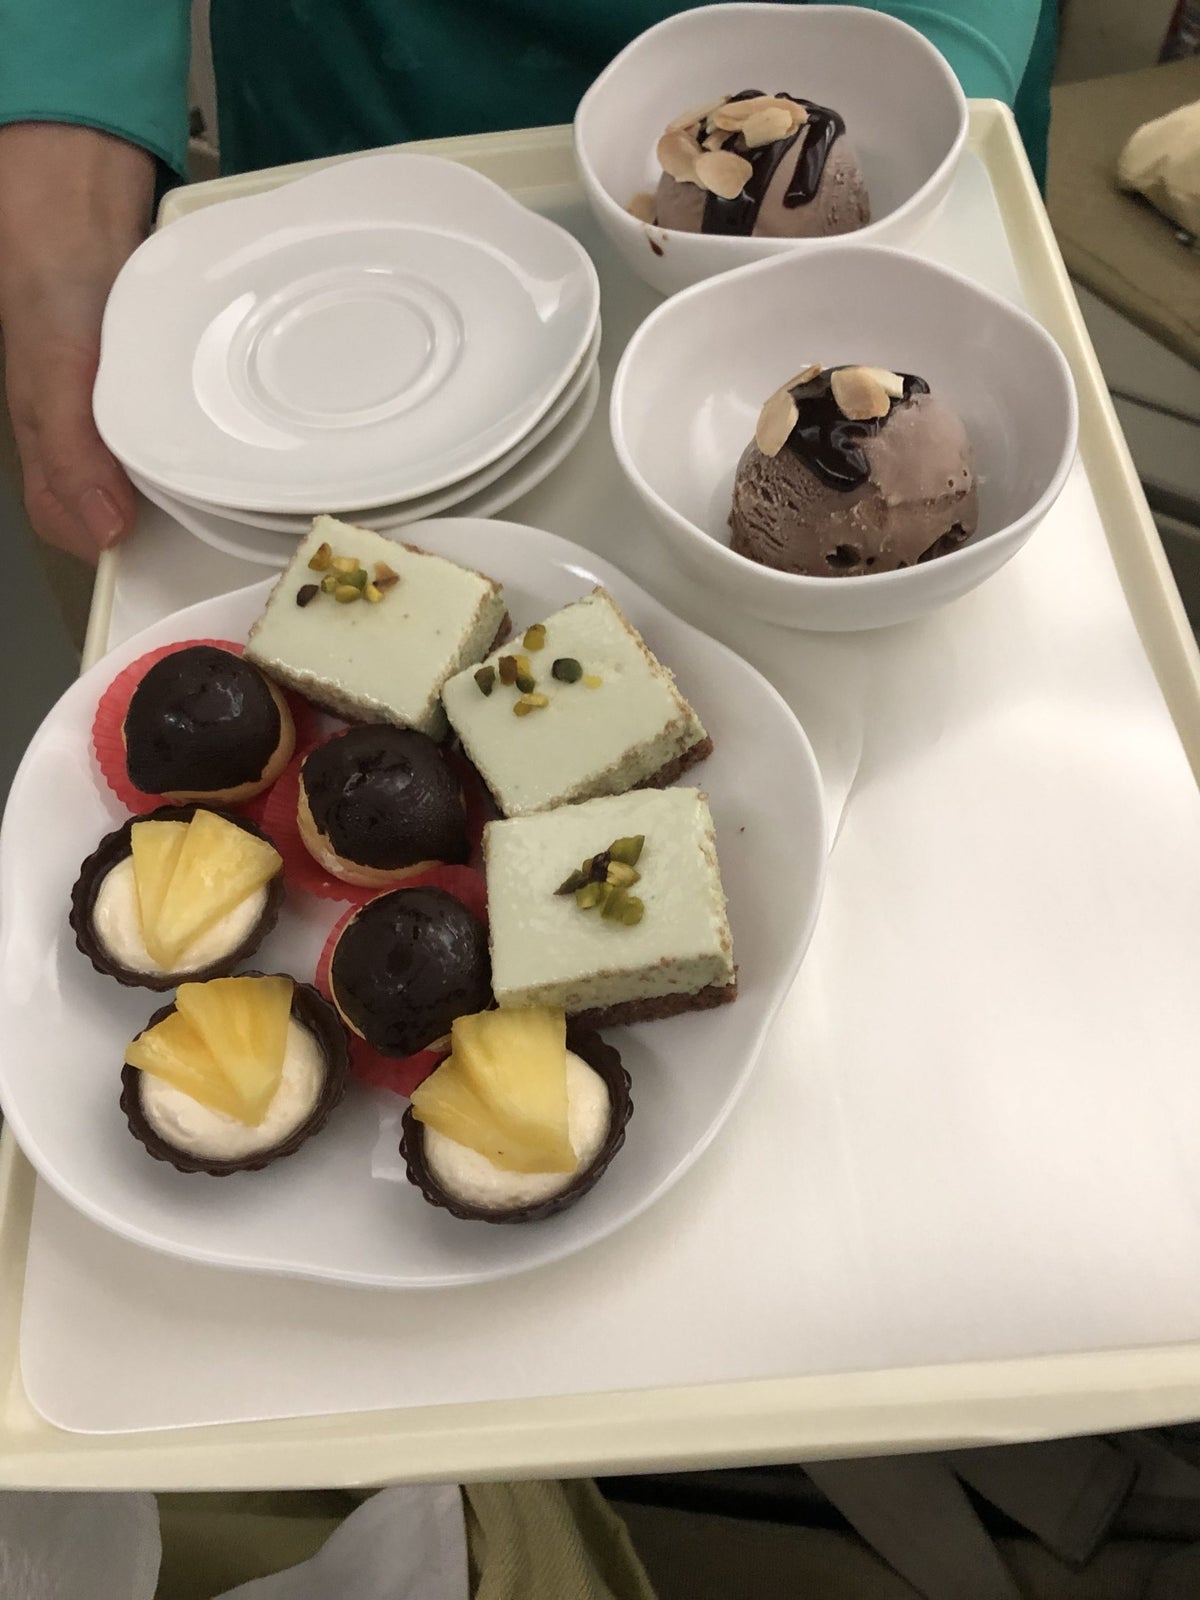 Vietnam Airlines 787-9 business class desserts